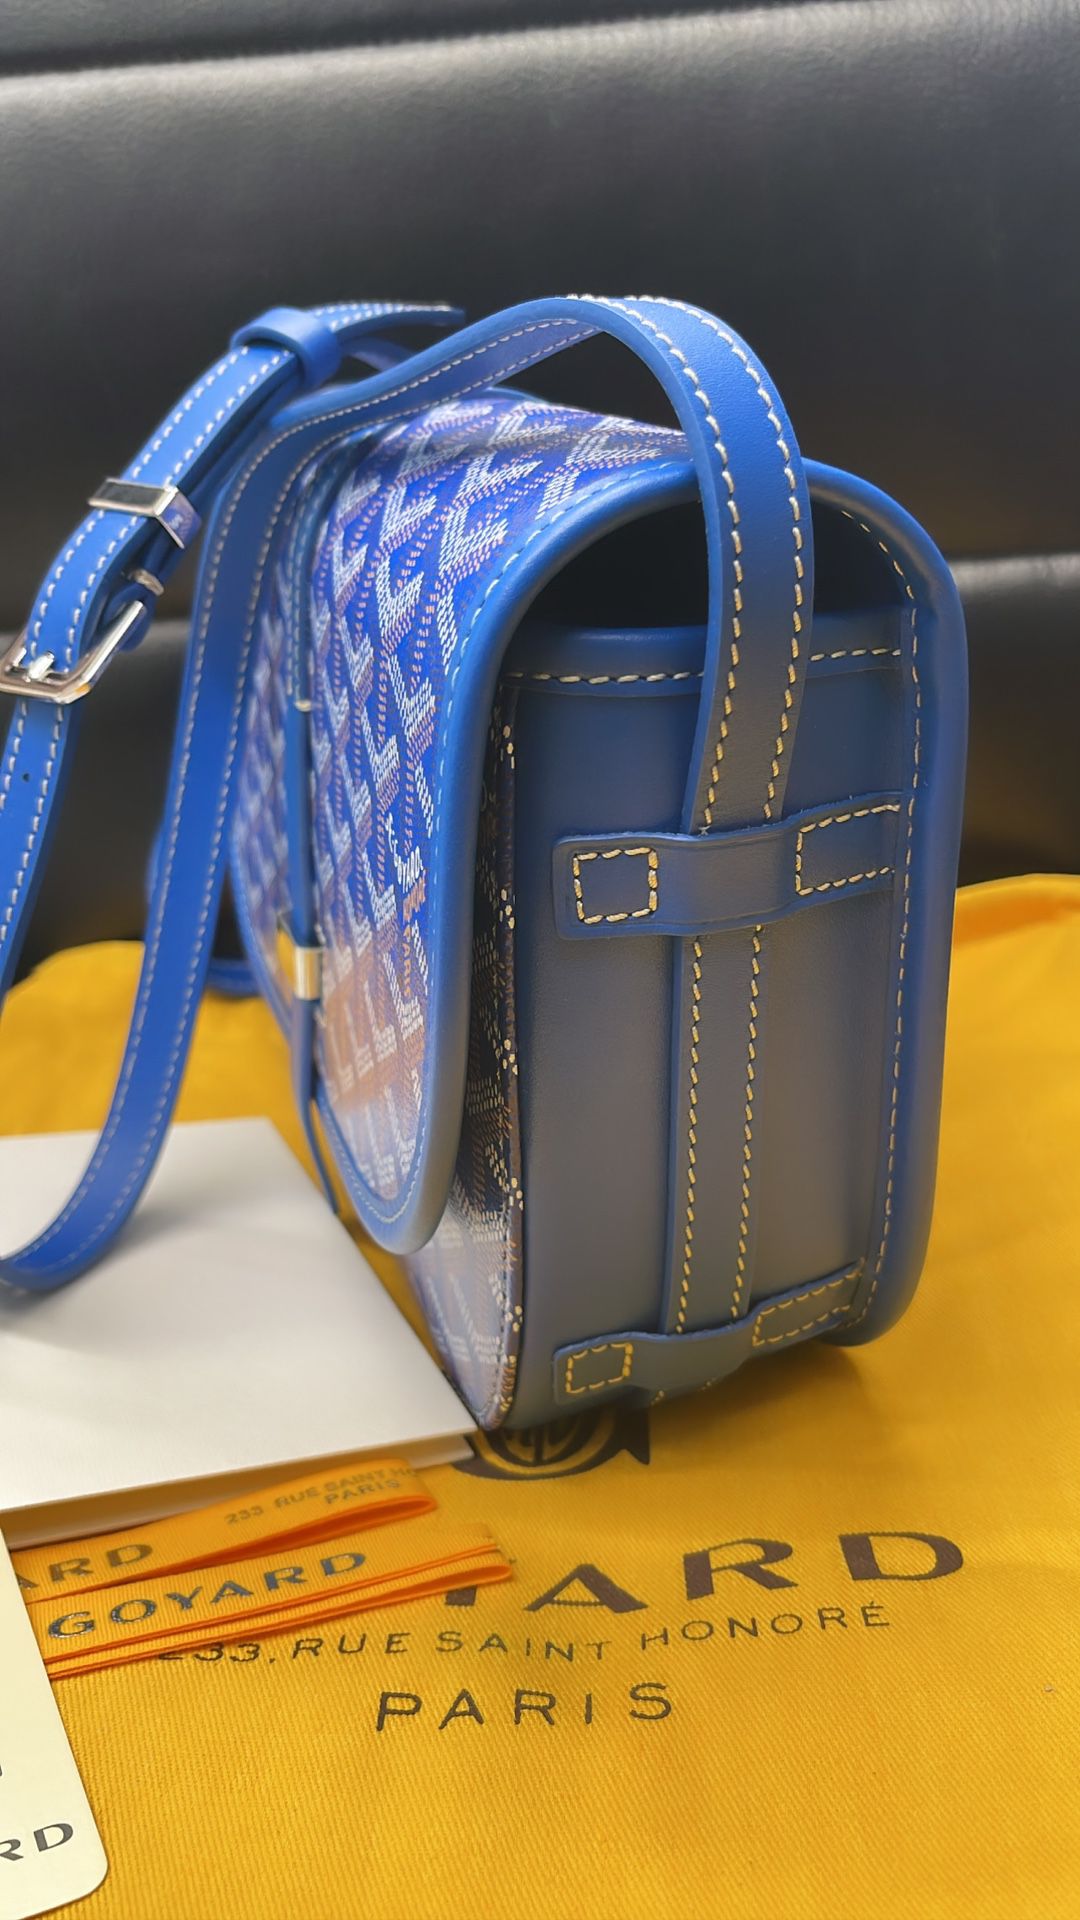 Goyard Cap-Vert Camara Bag Saigon Adjustable Strap Messenger Bag Crossbody Shoulderbag  Blue for Sale in Miami, FL - OfferUp